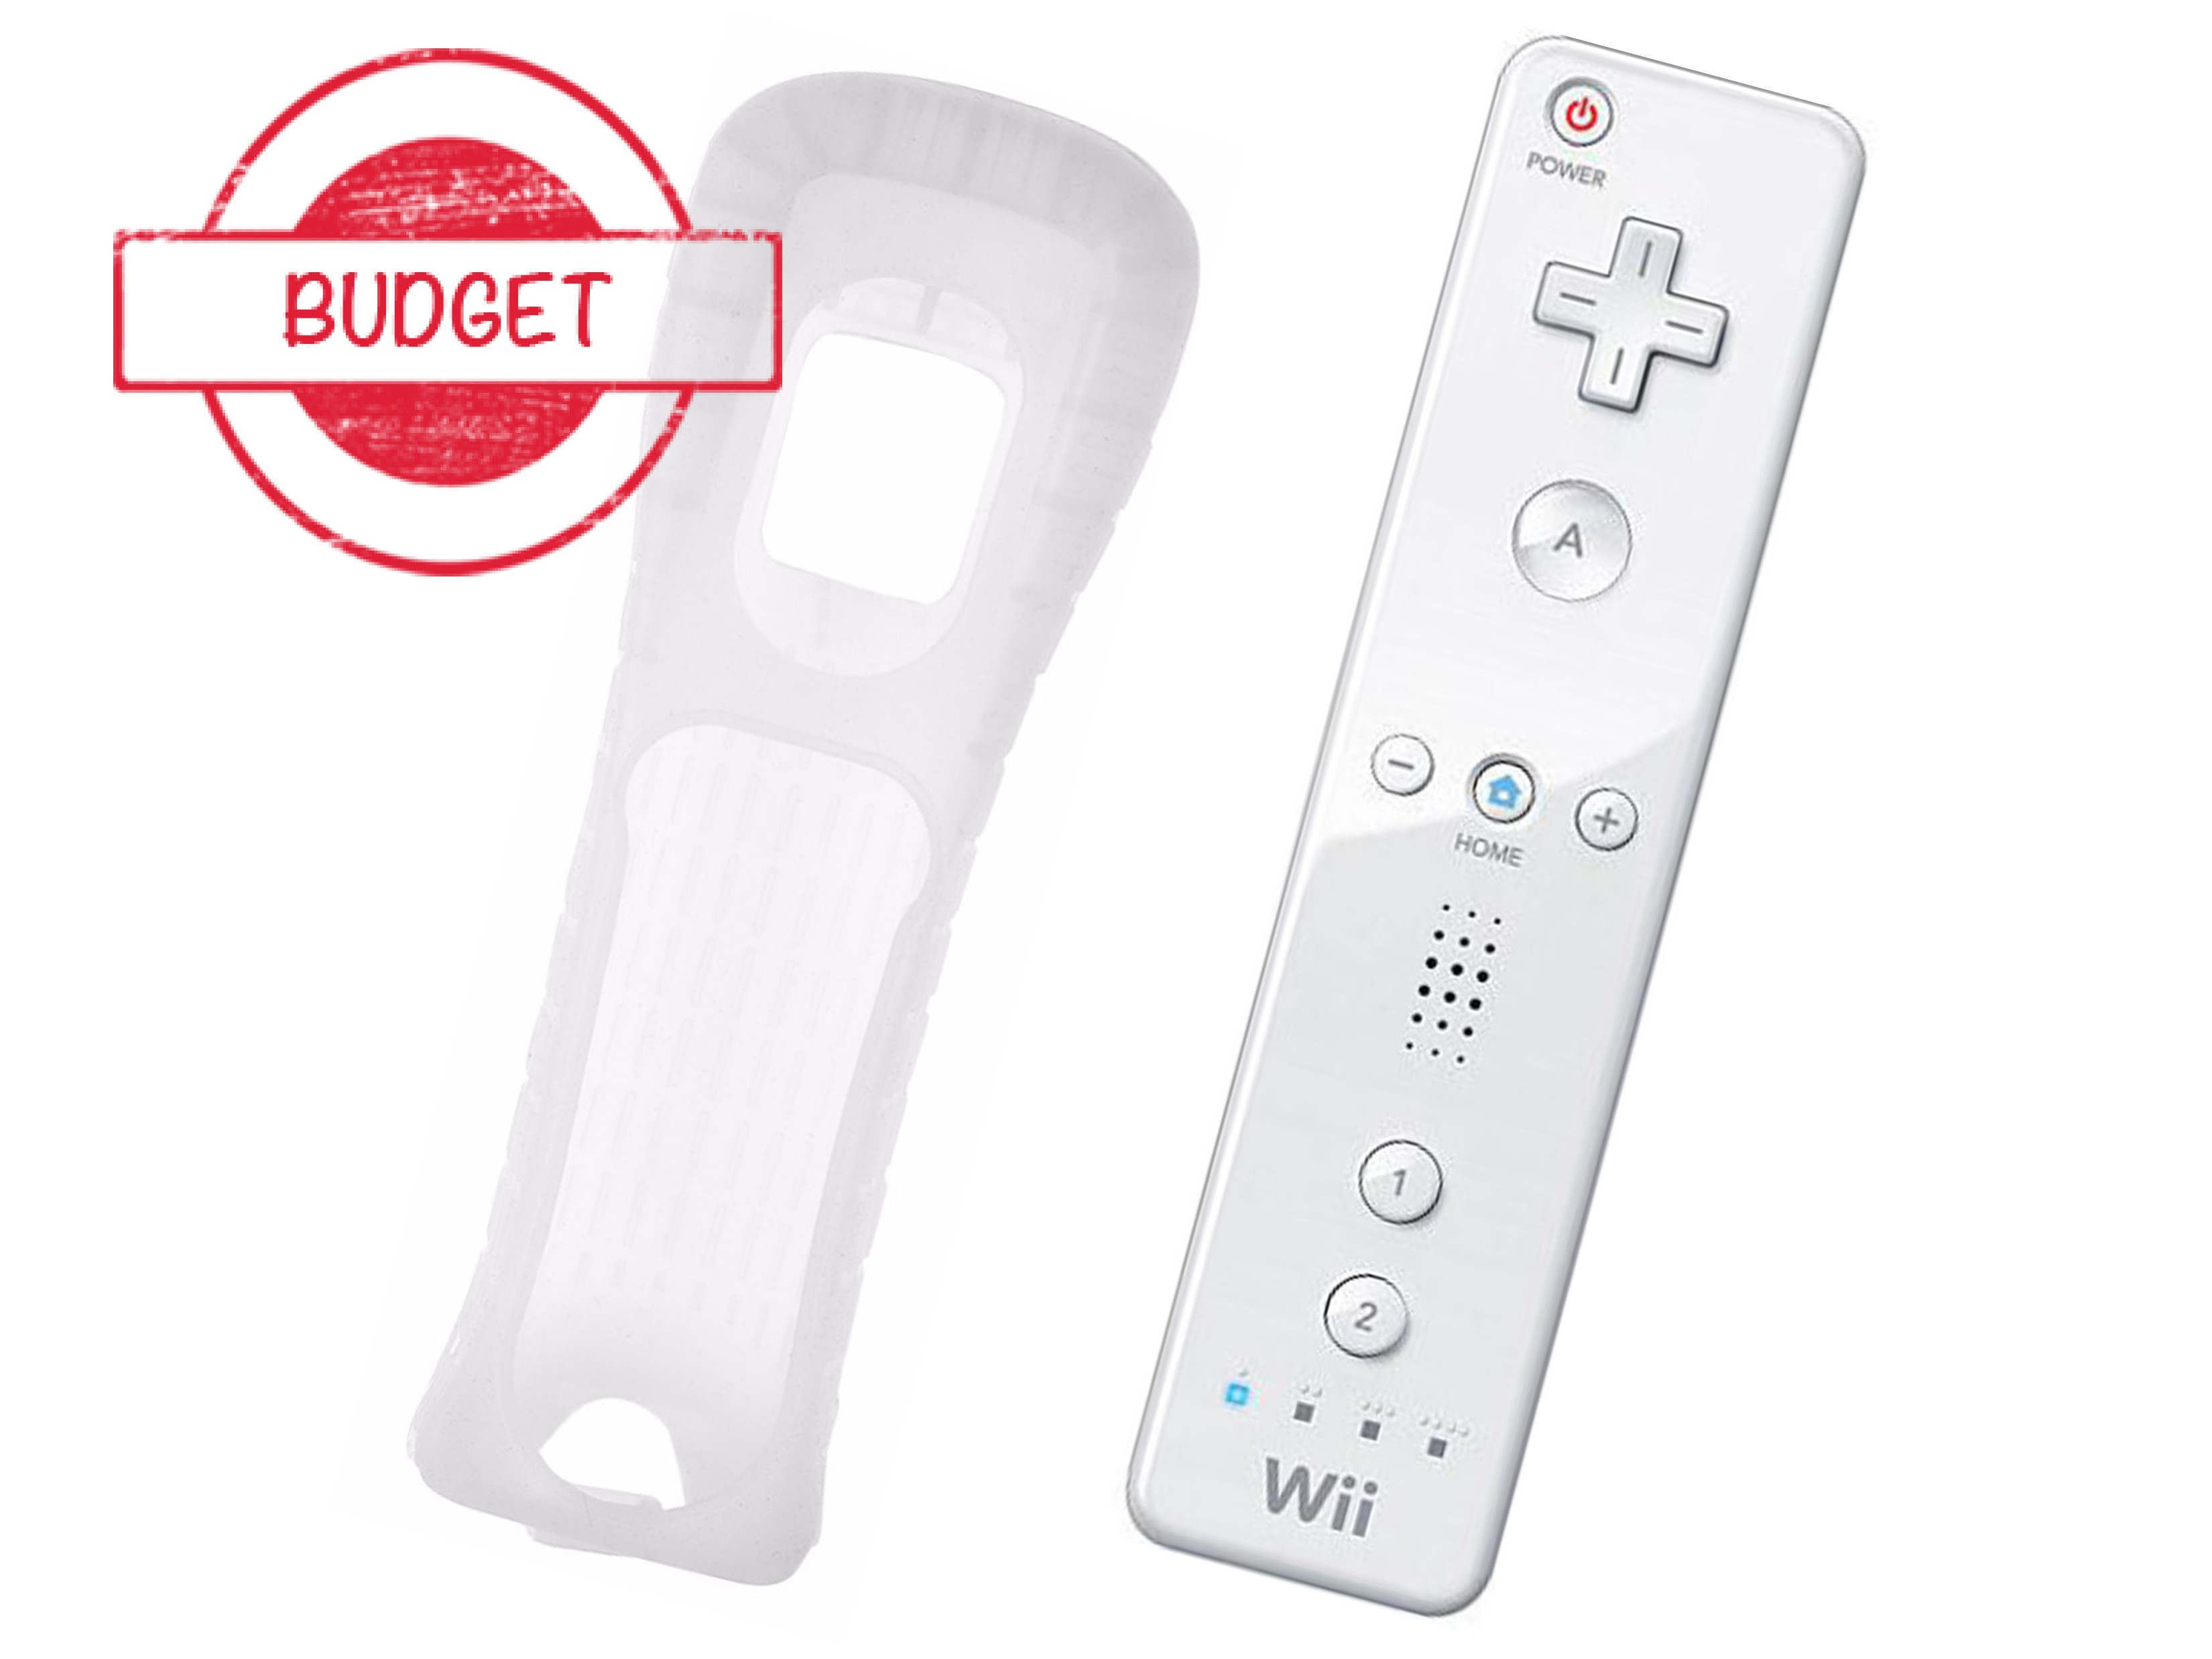 Nintendo Wii U Starter Pack - Wii Party U Edition - Budget - Wii U Hardware - 4